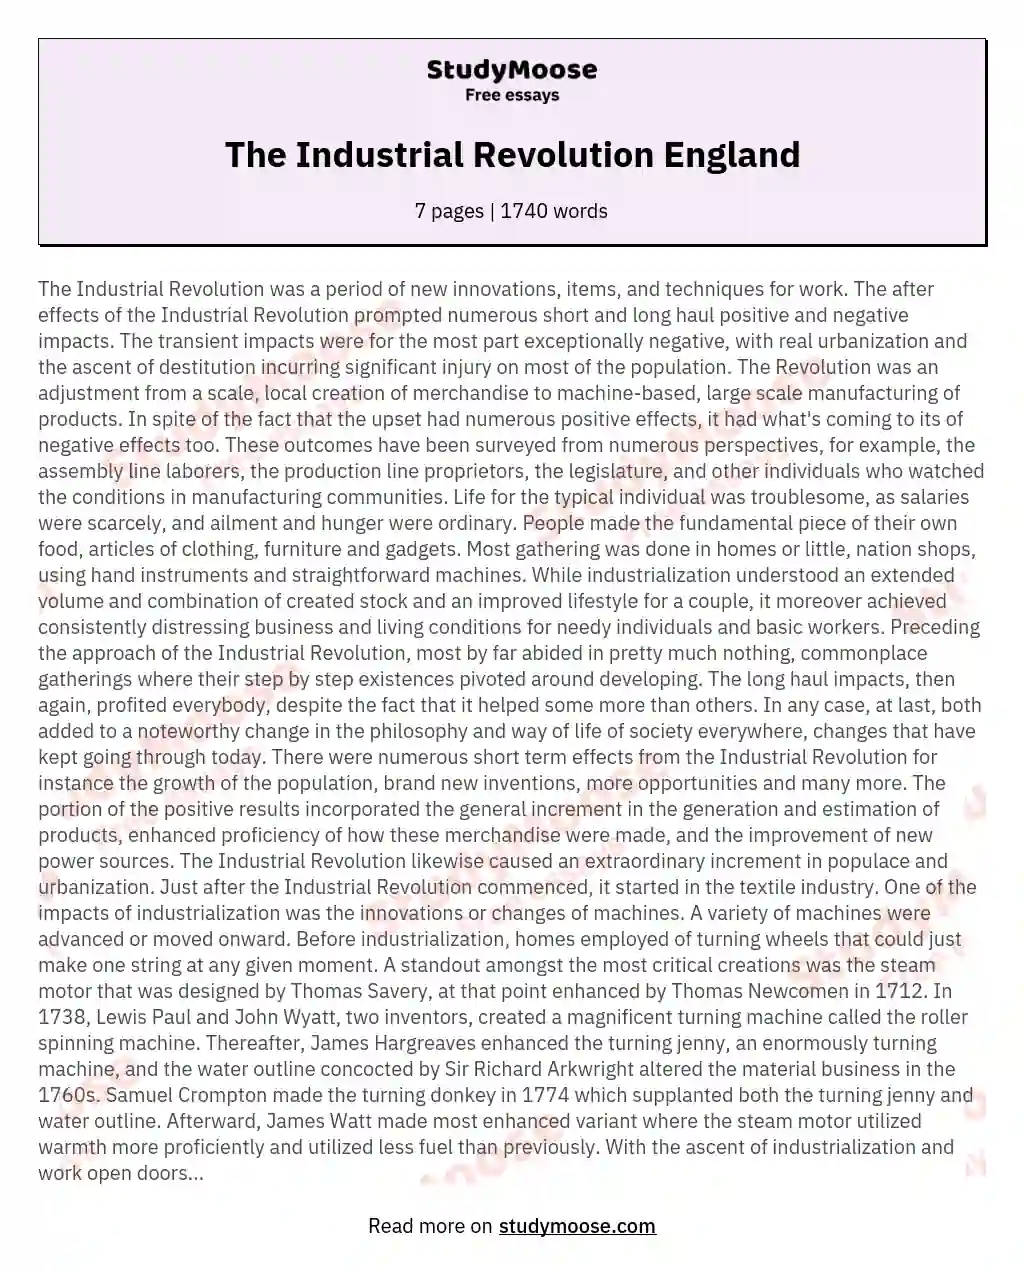 The Industrial Revolution England essay